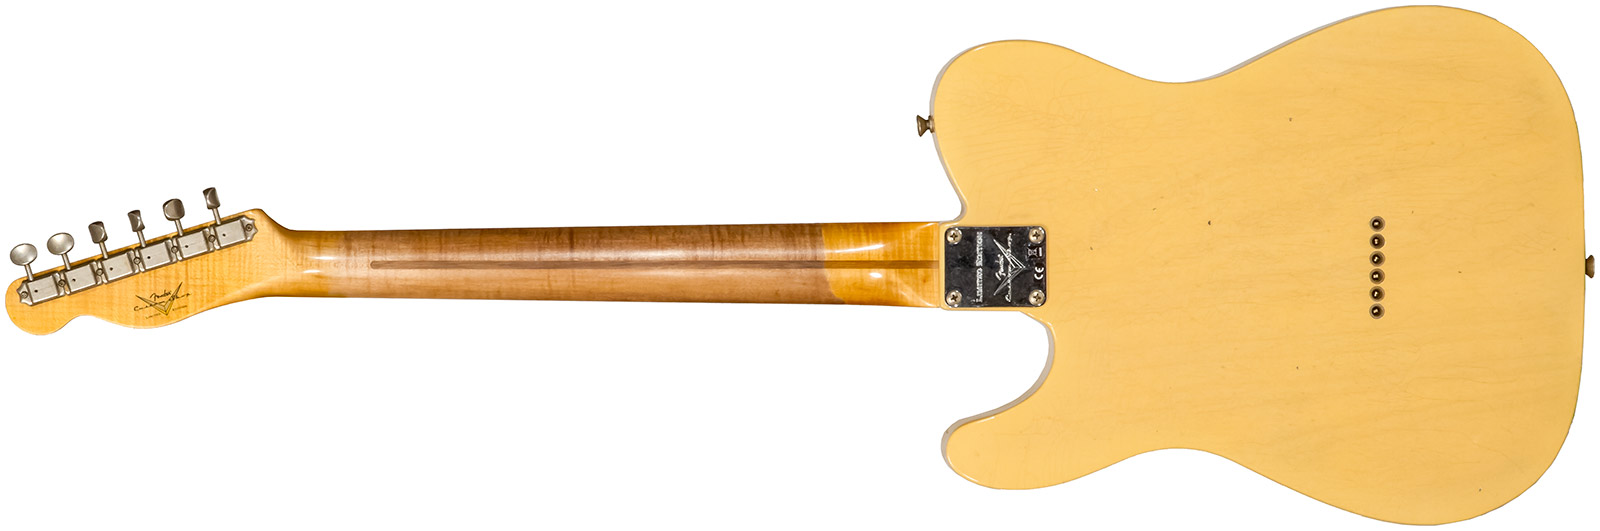 Fender Custom Shop Tele 1953 2s Ht Mn #r126793 - Journeyman Relic Aged Nocaster Blonde - Televorm elektrische gitaar - Variation 1